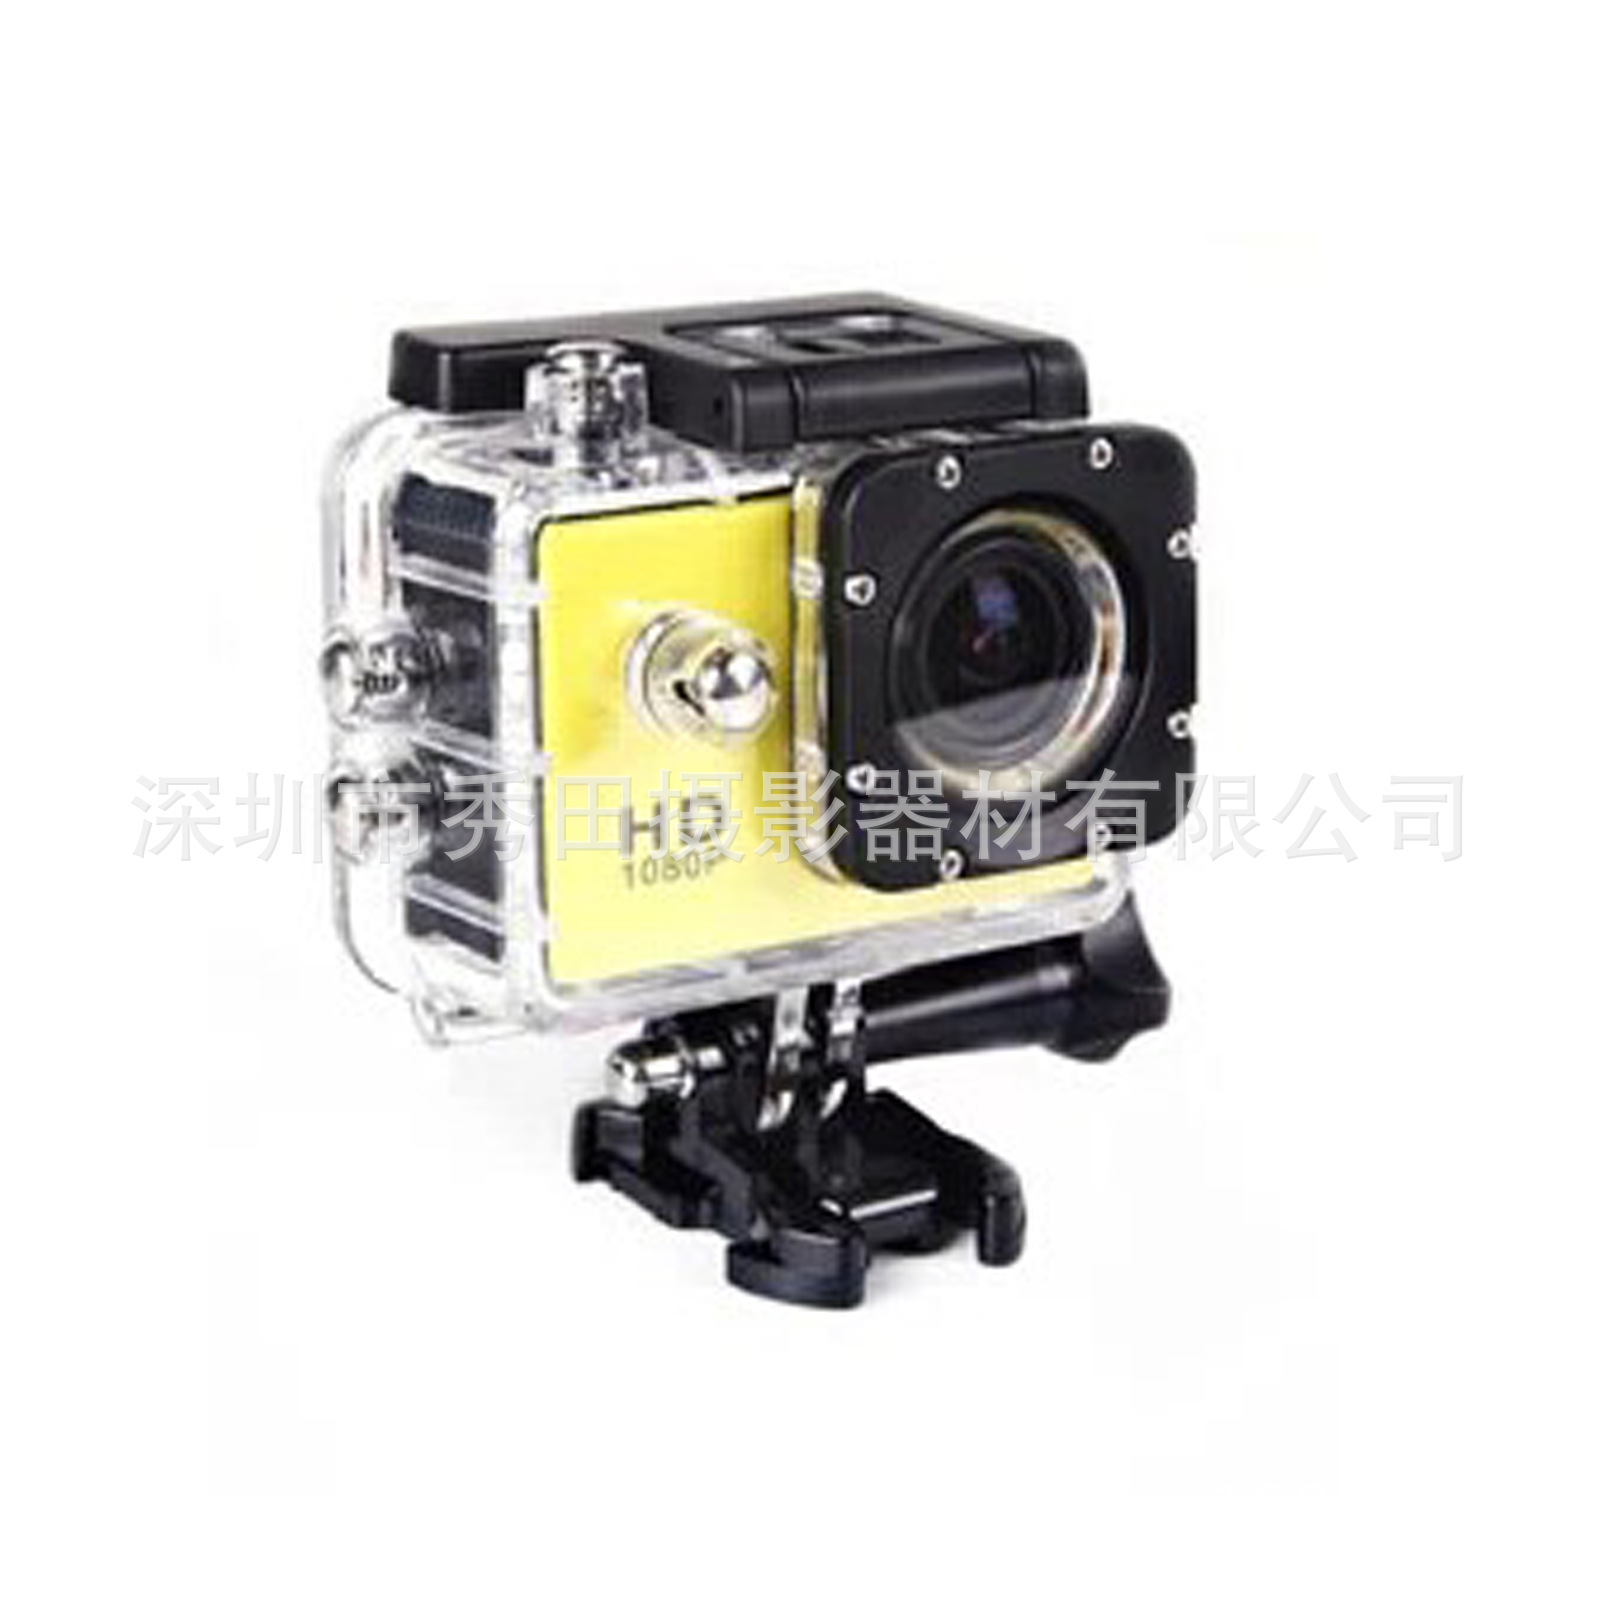 0735-sj4000全高清便携DV摄像机-黑-10